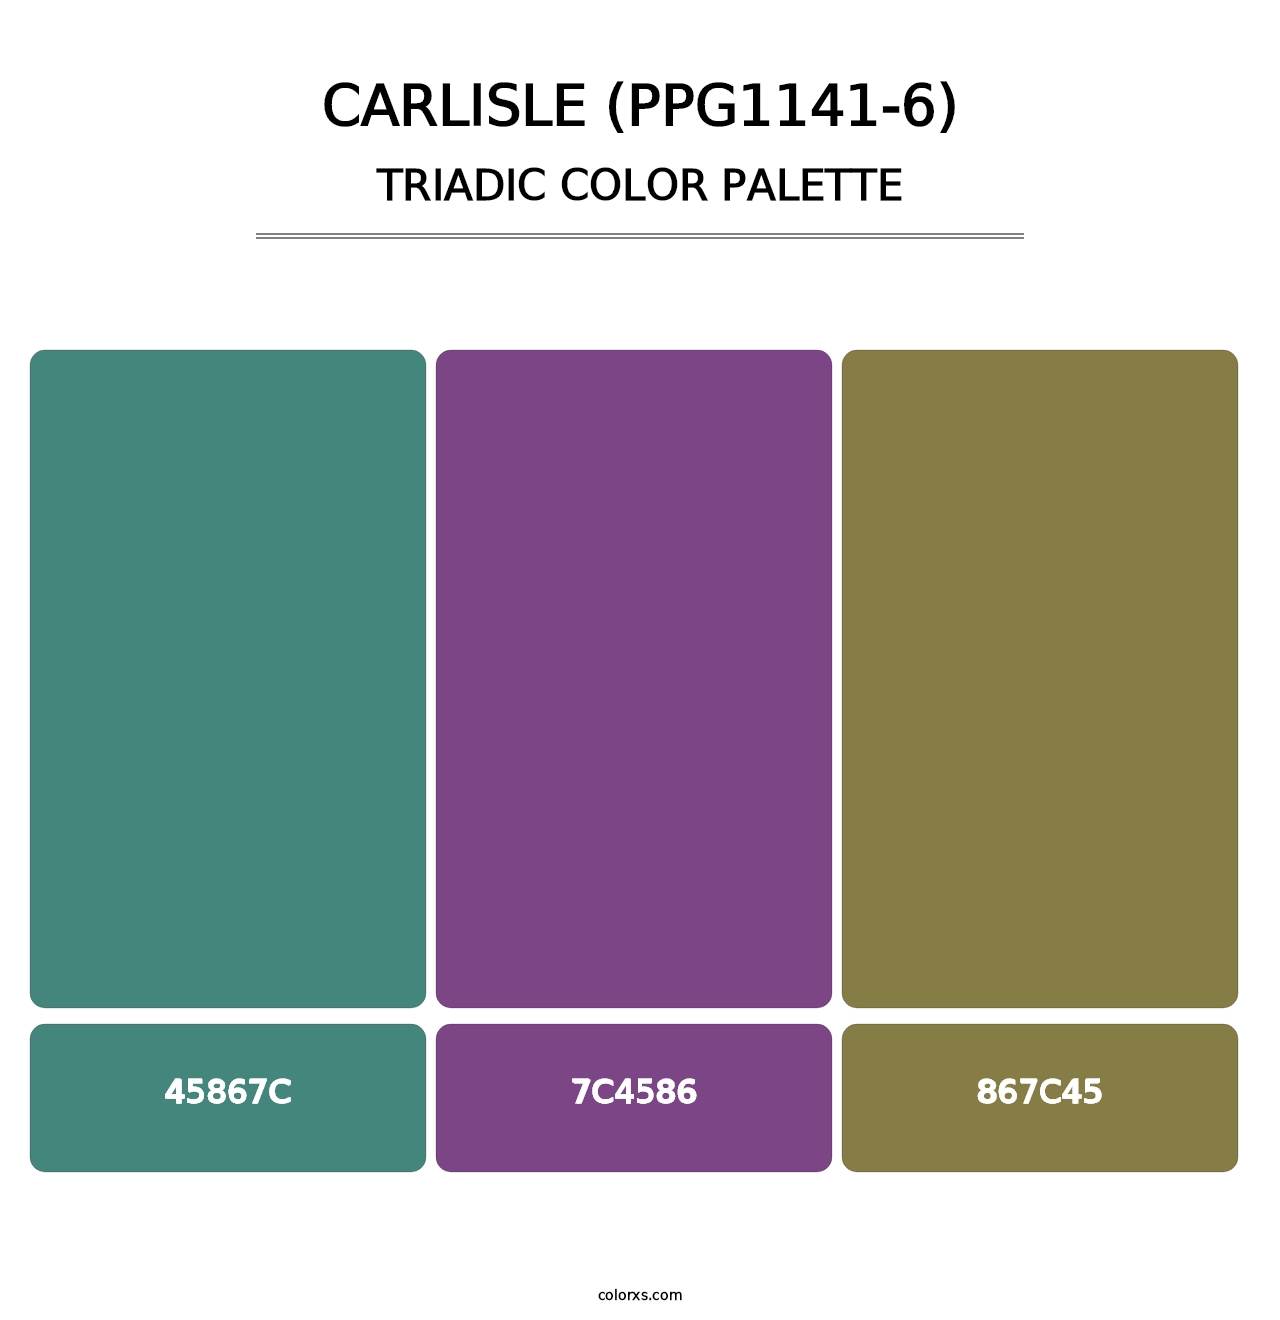 Carlisle (PPG1141-6) - Triadic Color Palette